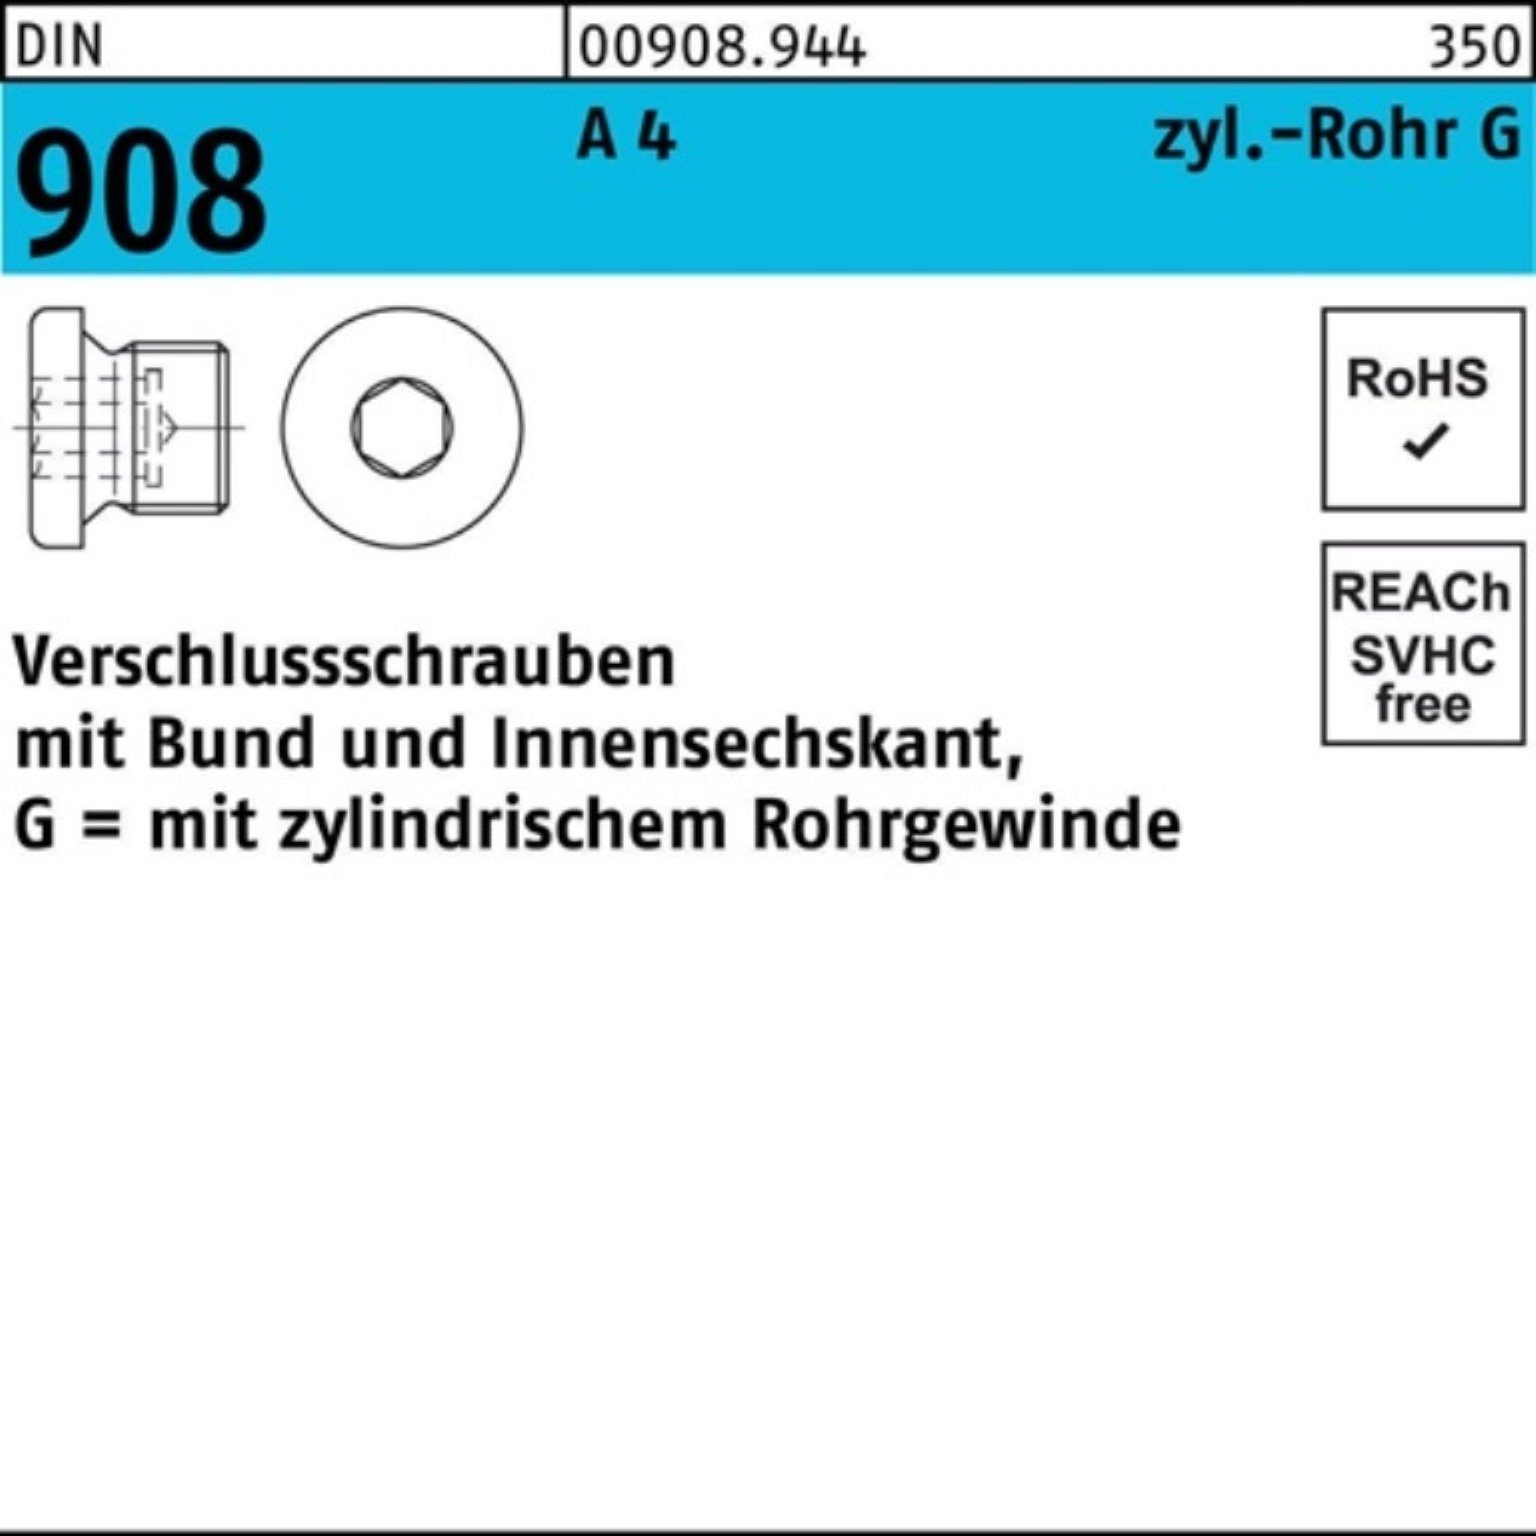 Reyher Schraube 100er Pack Verschlußschraube DIN 908 Bund/Innen-6kt G 2 A A 4 1 Stüc